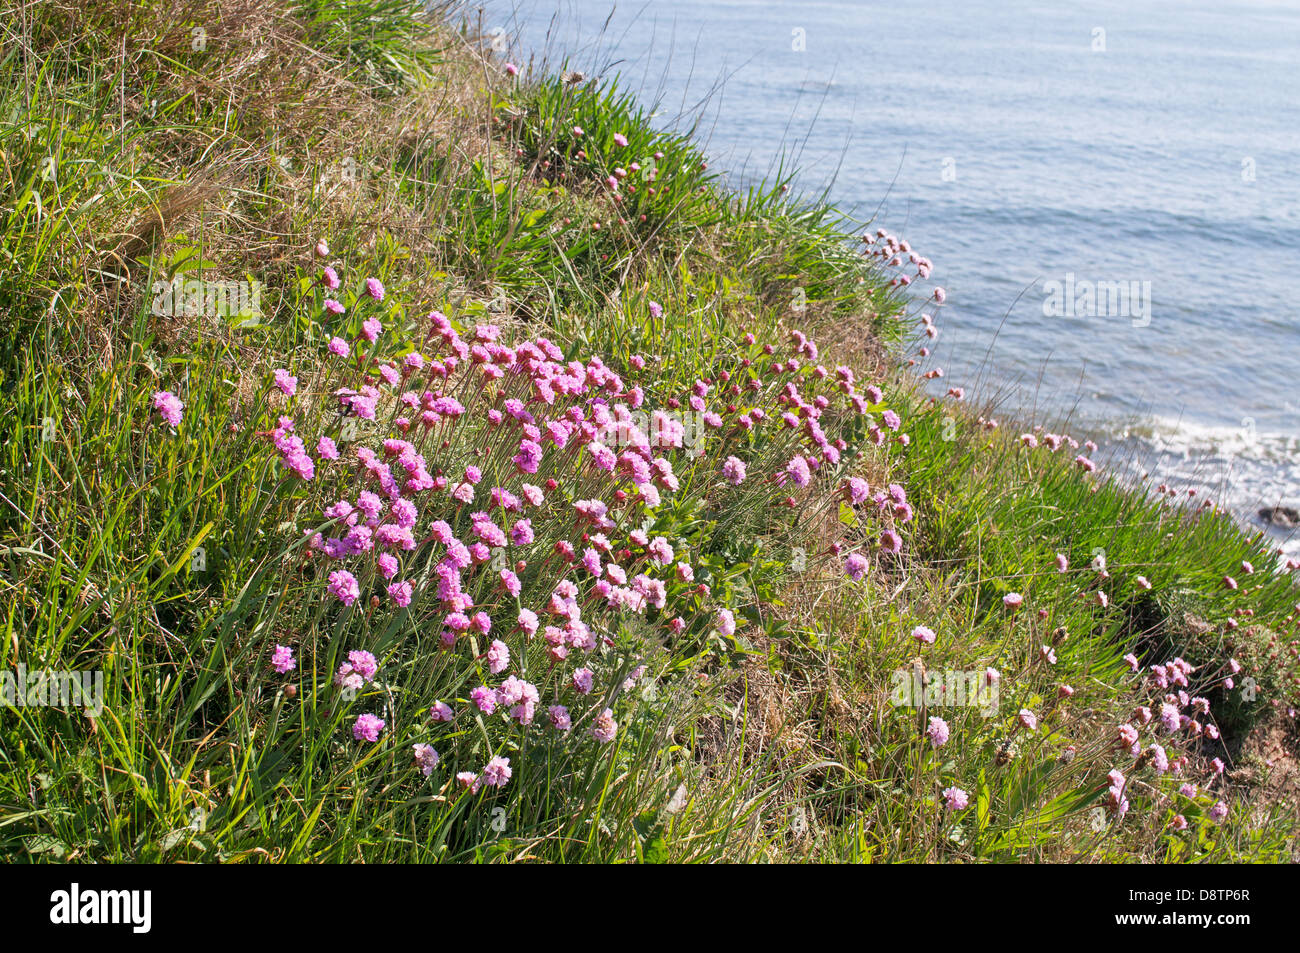 Mar rosa o el ahorro flores silvestres, visto desde la ruta costera del Mar del Norte, ya que pasa a través de Whitburn, al noreste de Inglaterra Foto de stock